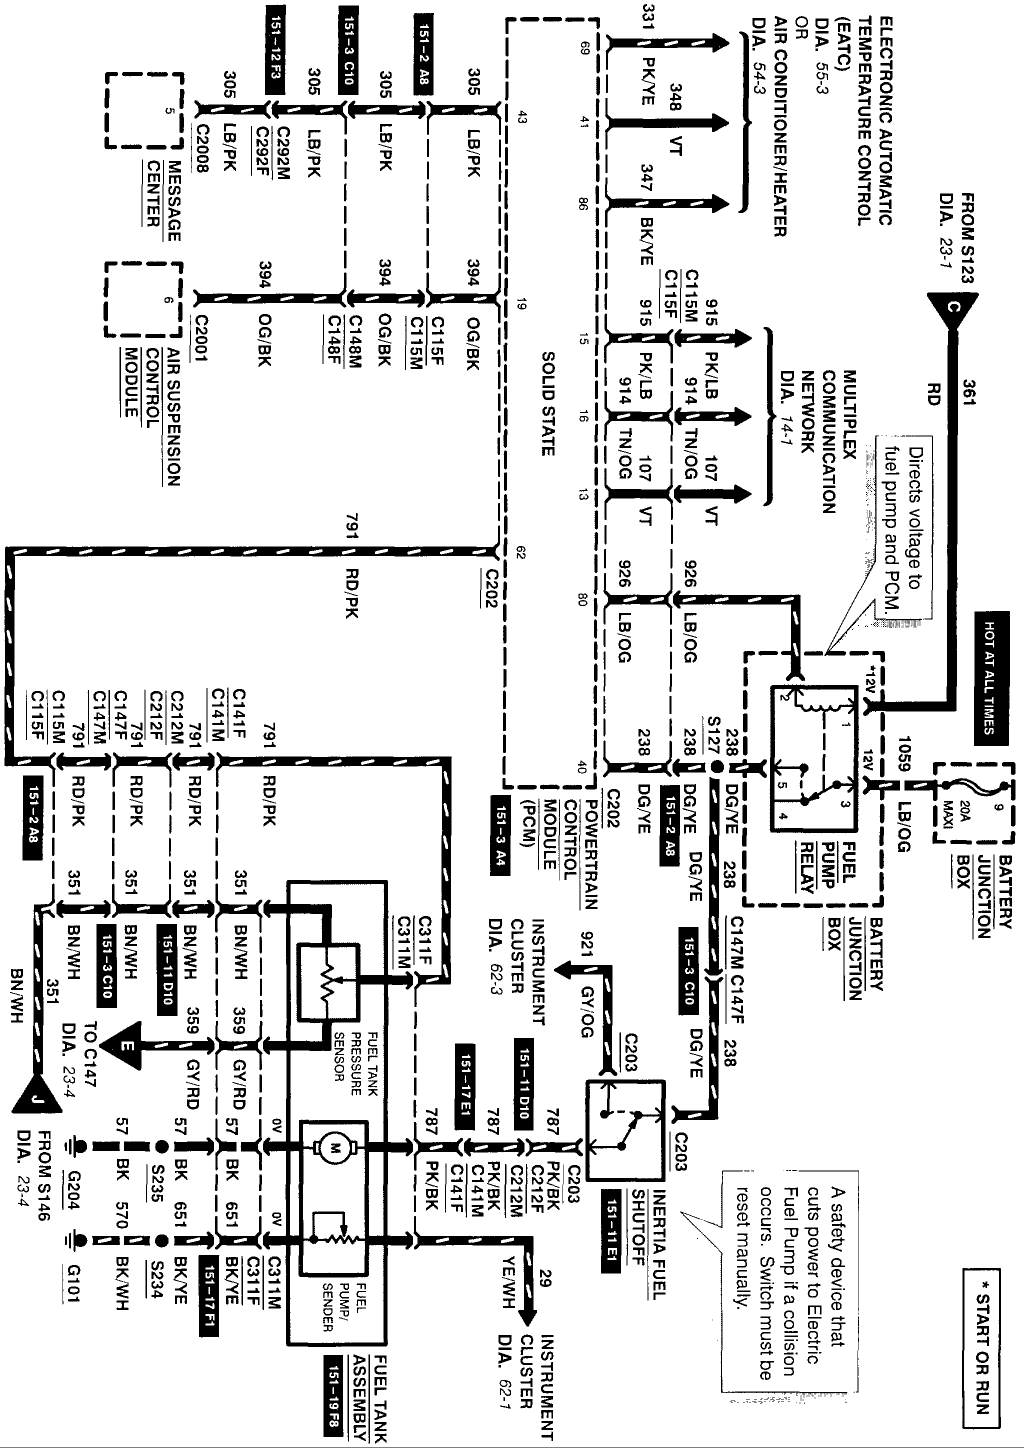 1999 Ford F150 Fuse Box Layout - Wiring Diagram